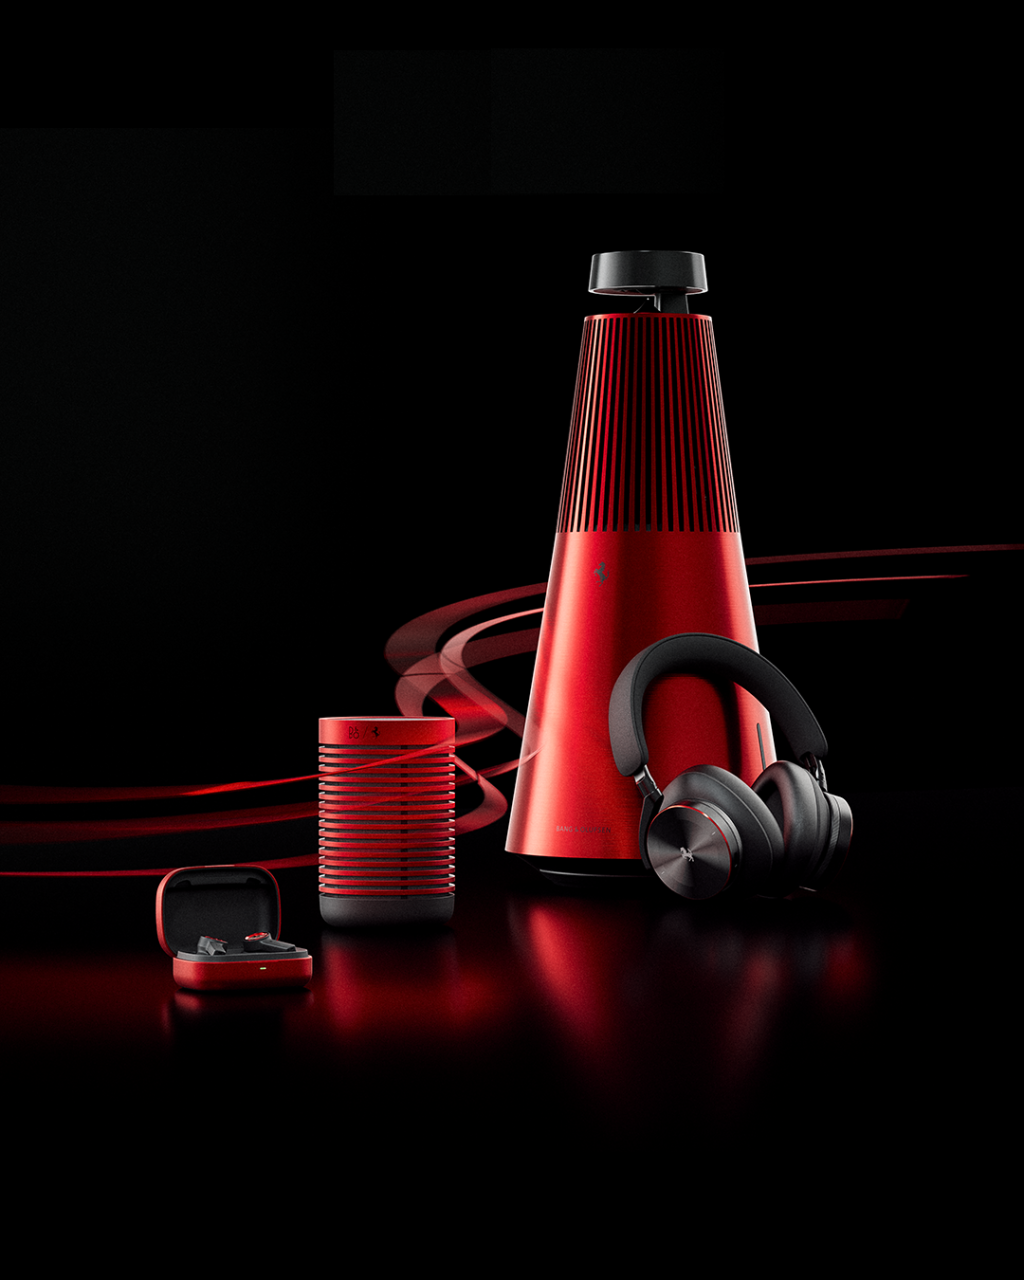 ■Bang & Olufsen与法拉利推出4款系列联名产品，包括家用扬声器、无线耳机、头戴式耳机及便携式扬声器。